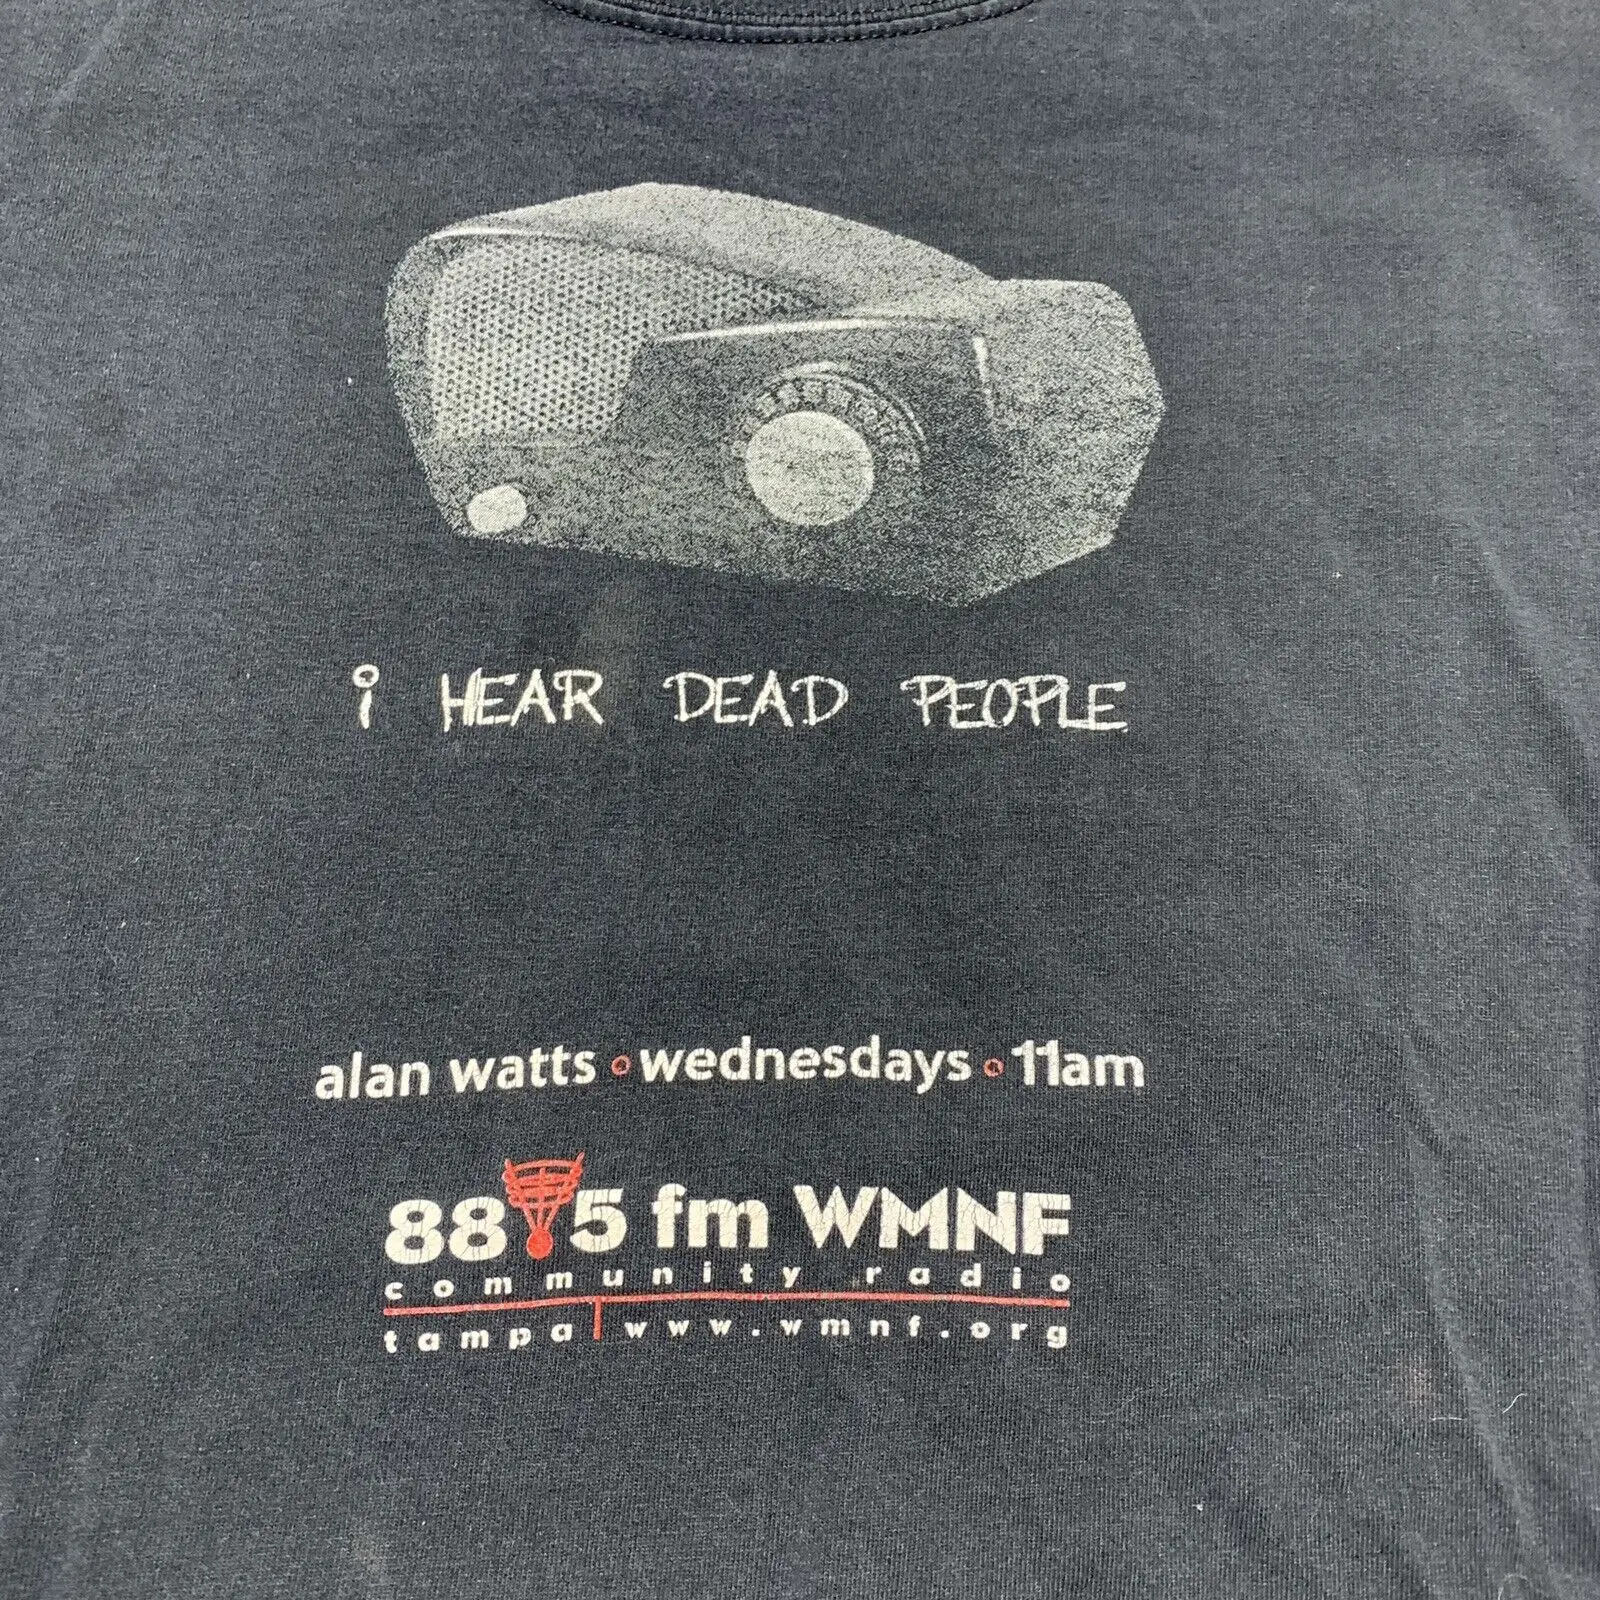 Футболка WNMF 88.5 Community Radio I Hear Dead People Tampa Art Tee Мужская XL с длинными рукавами